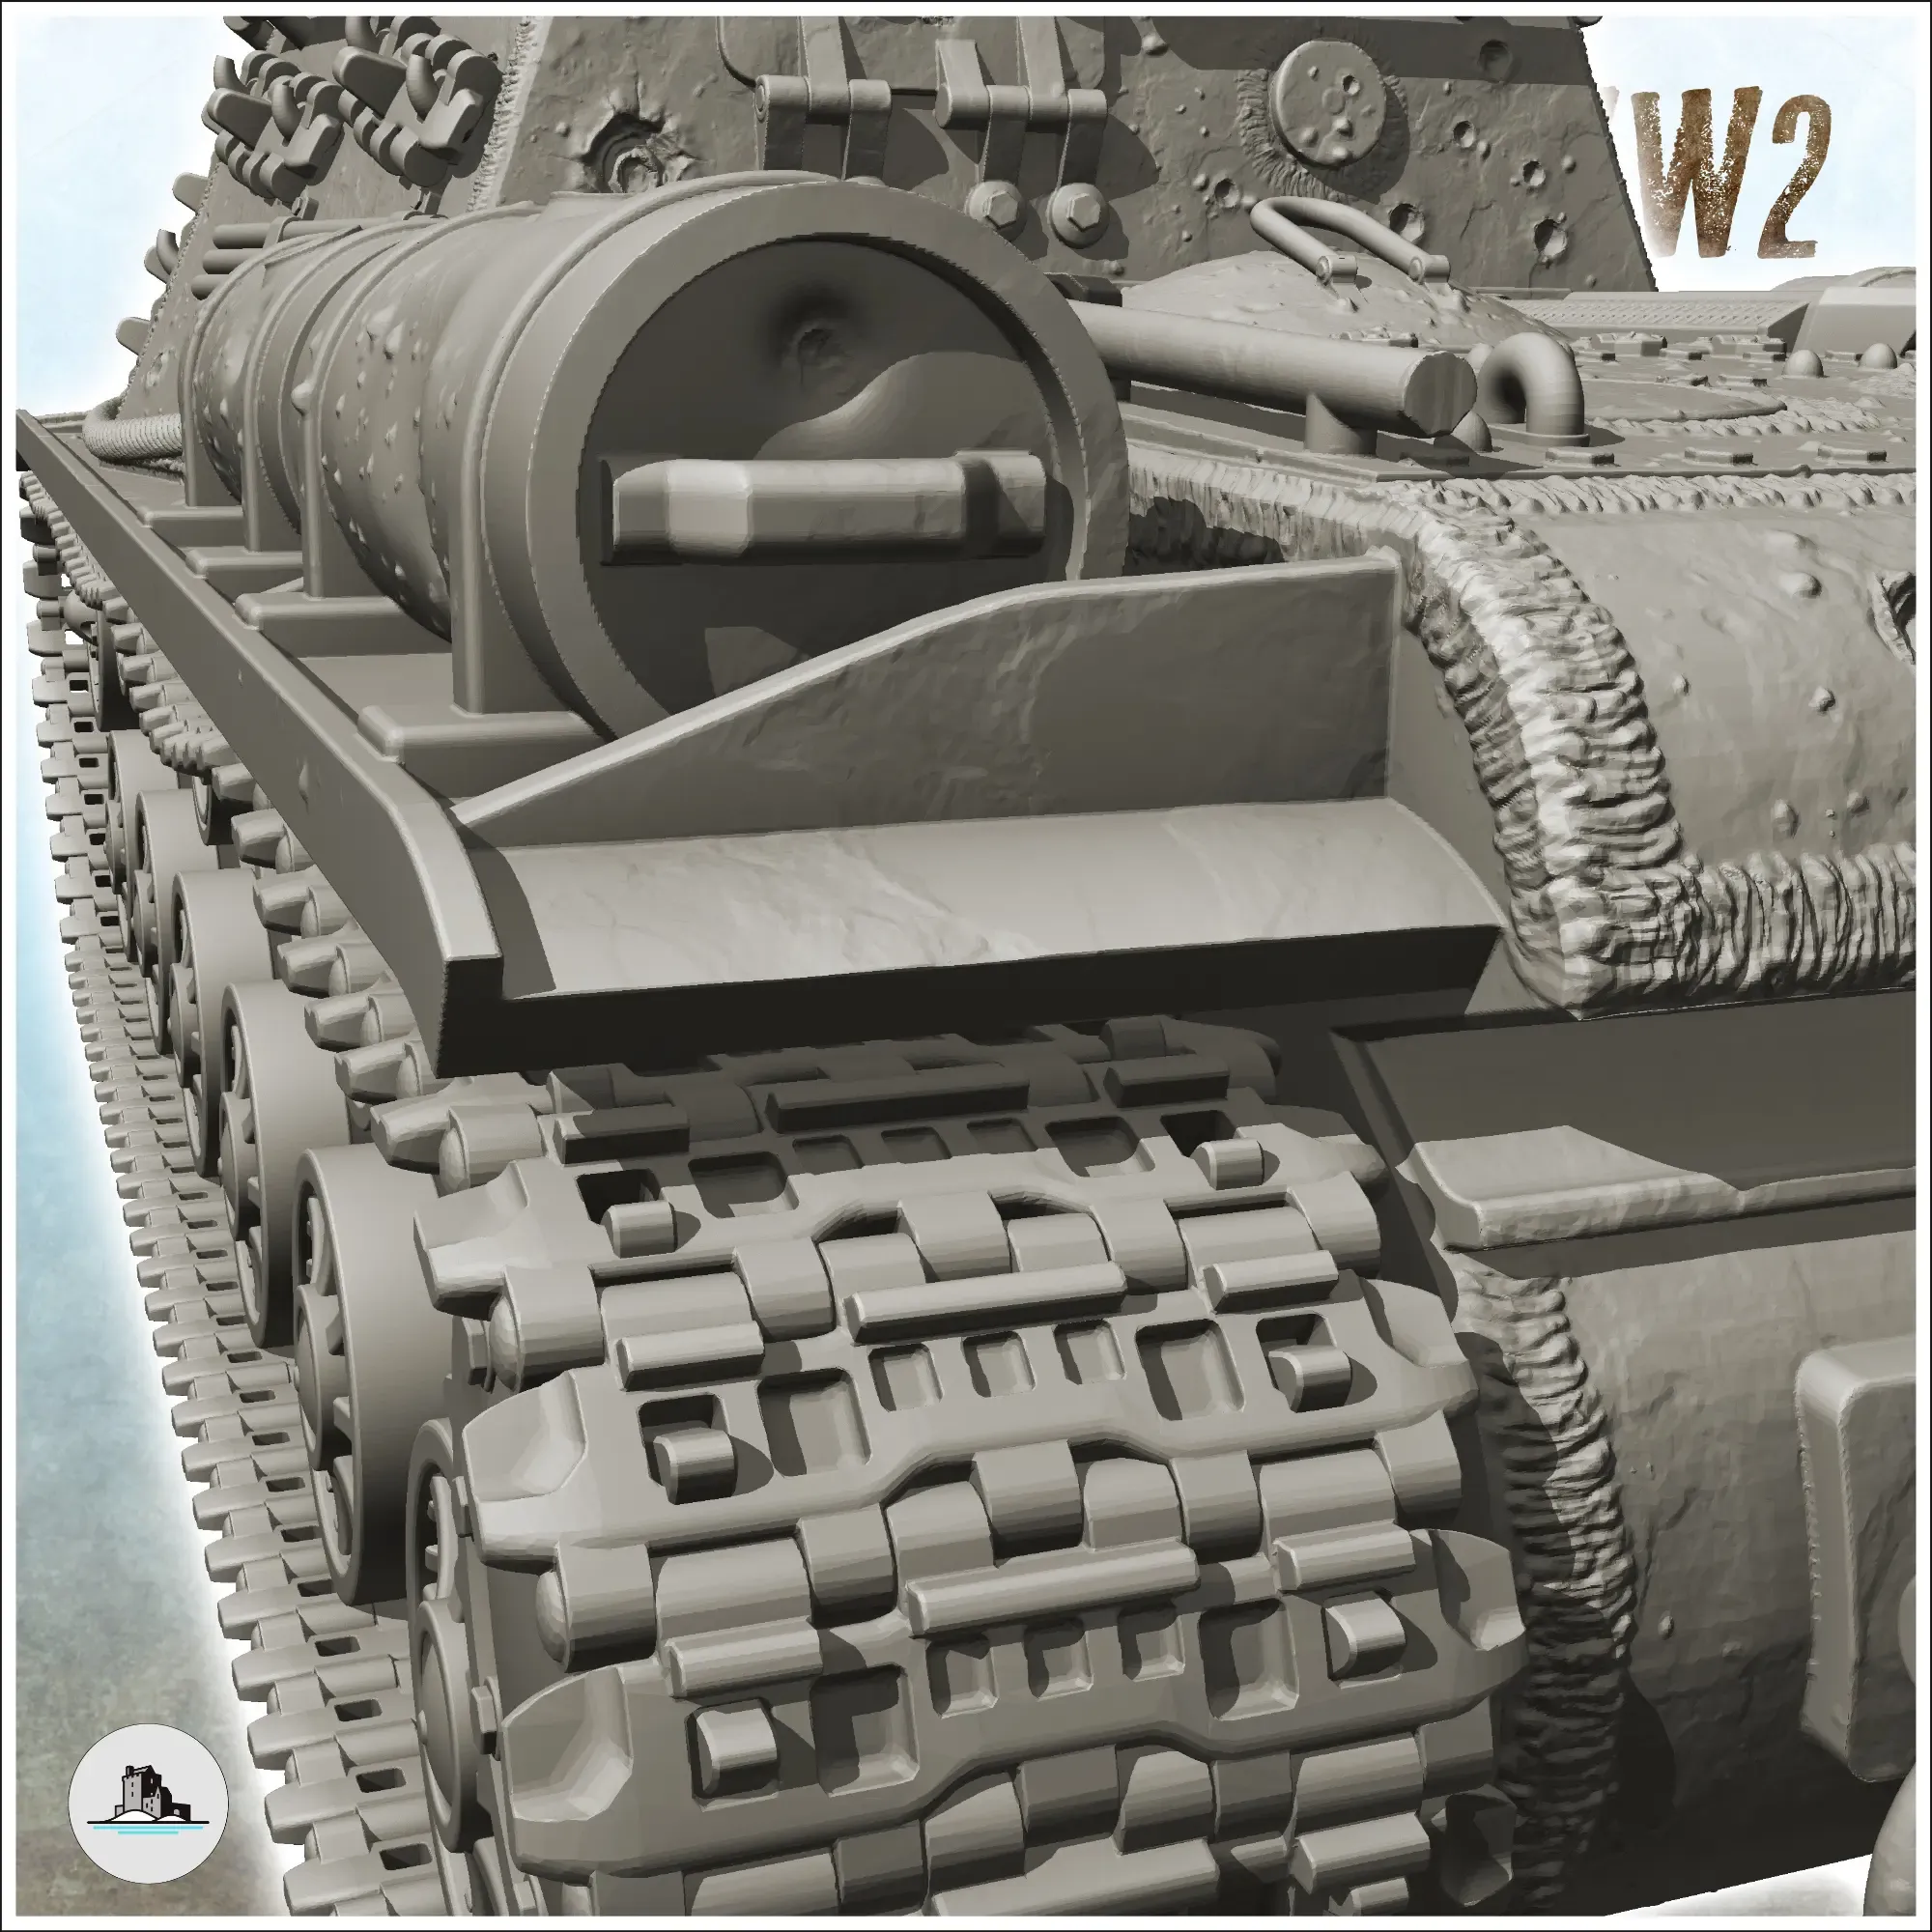 SU-152 tank - Russia USSR WW2 Flames of War Bolt Action